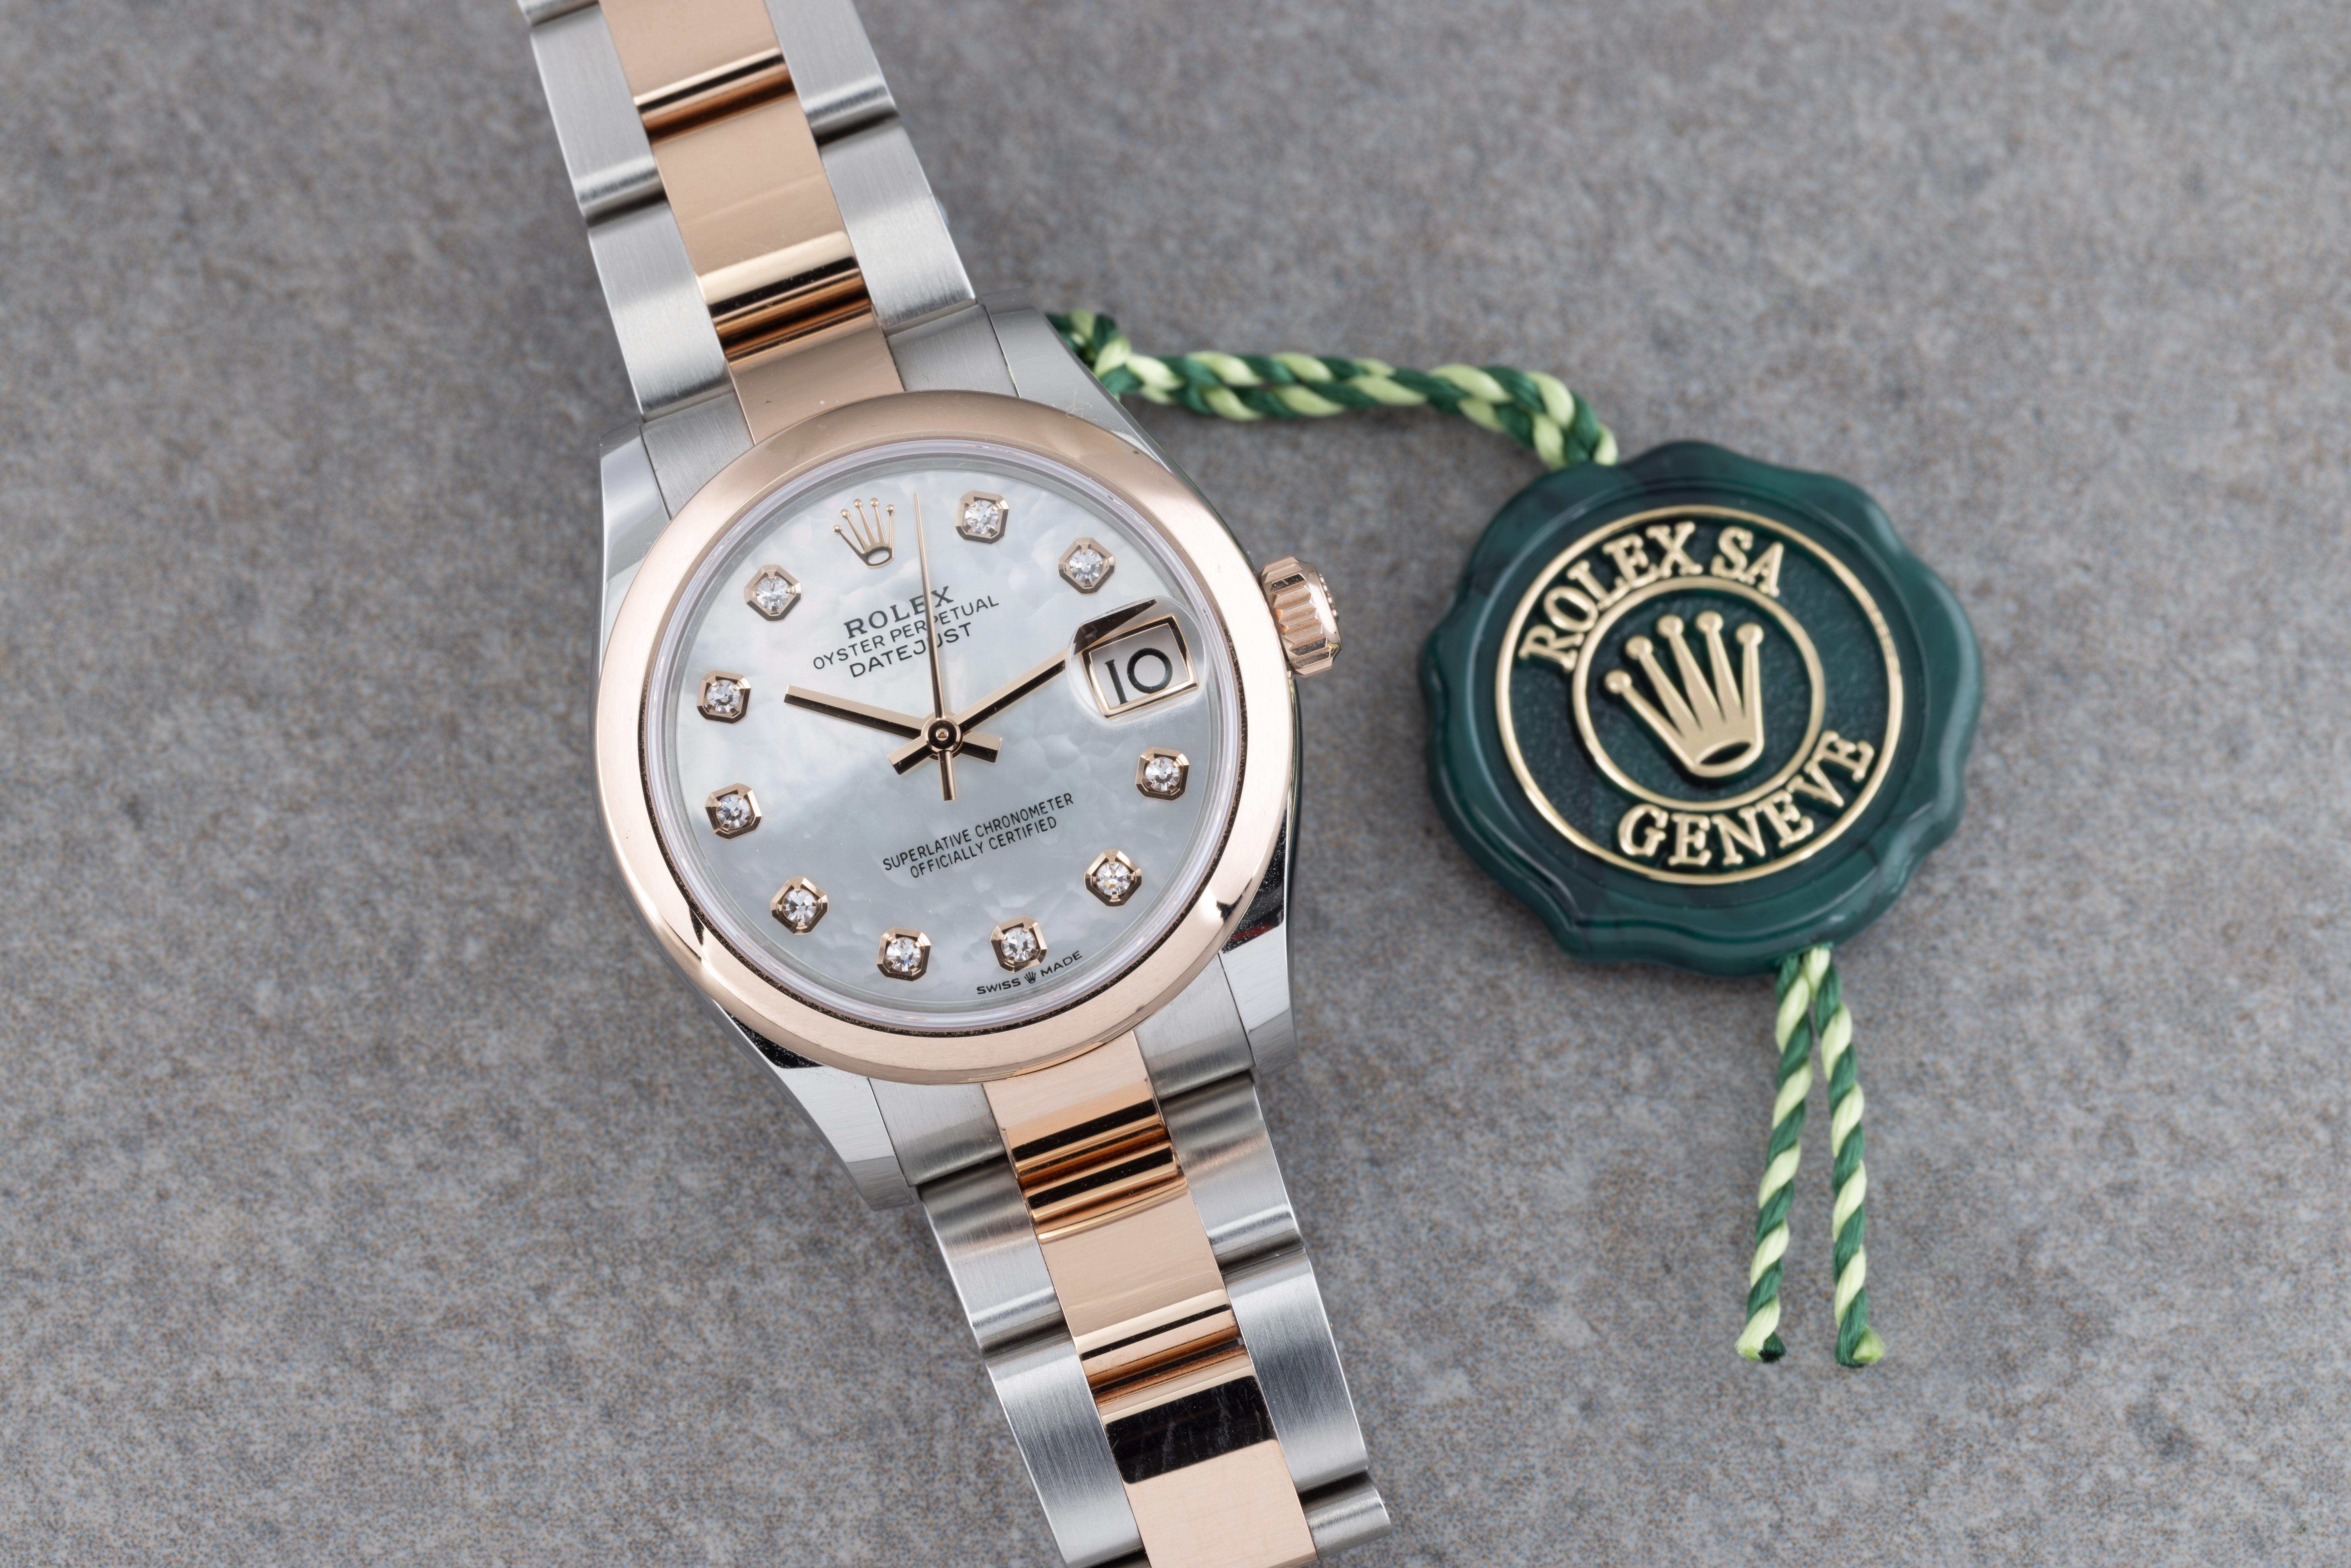 A Rolex Oyster Perpetual Superlative Chronometer Datejust watch